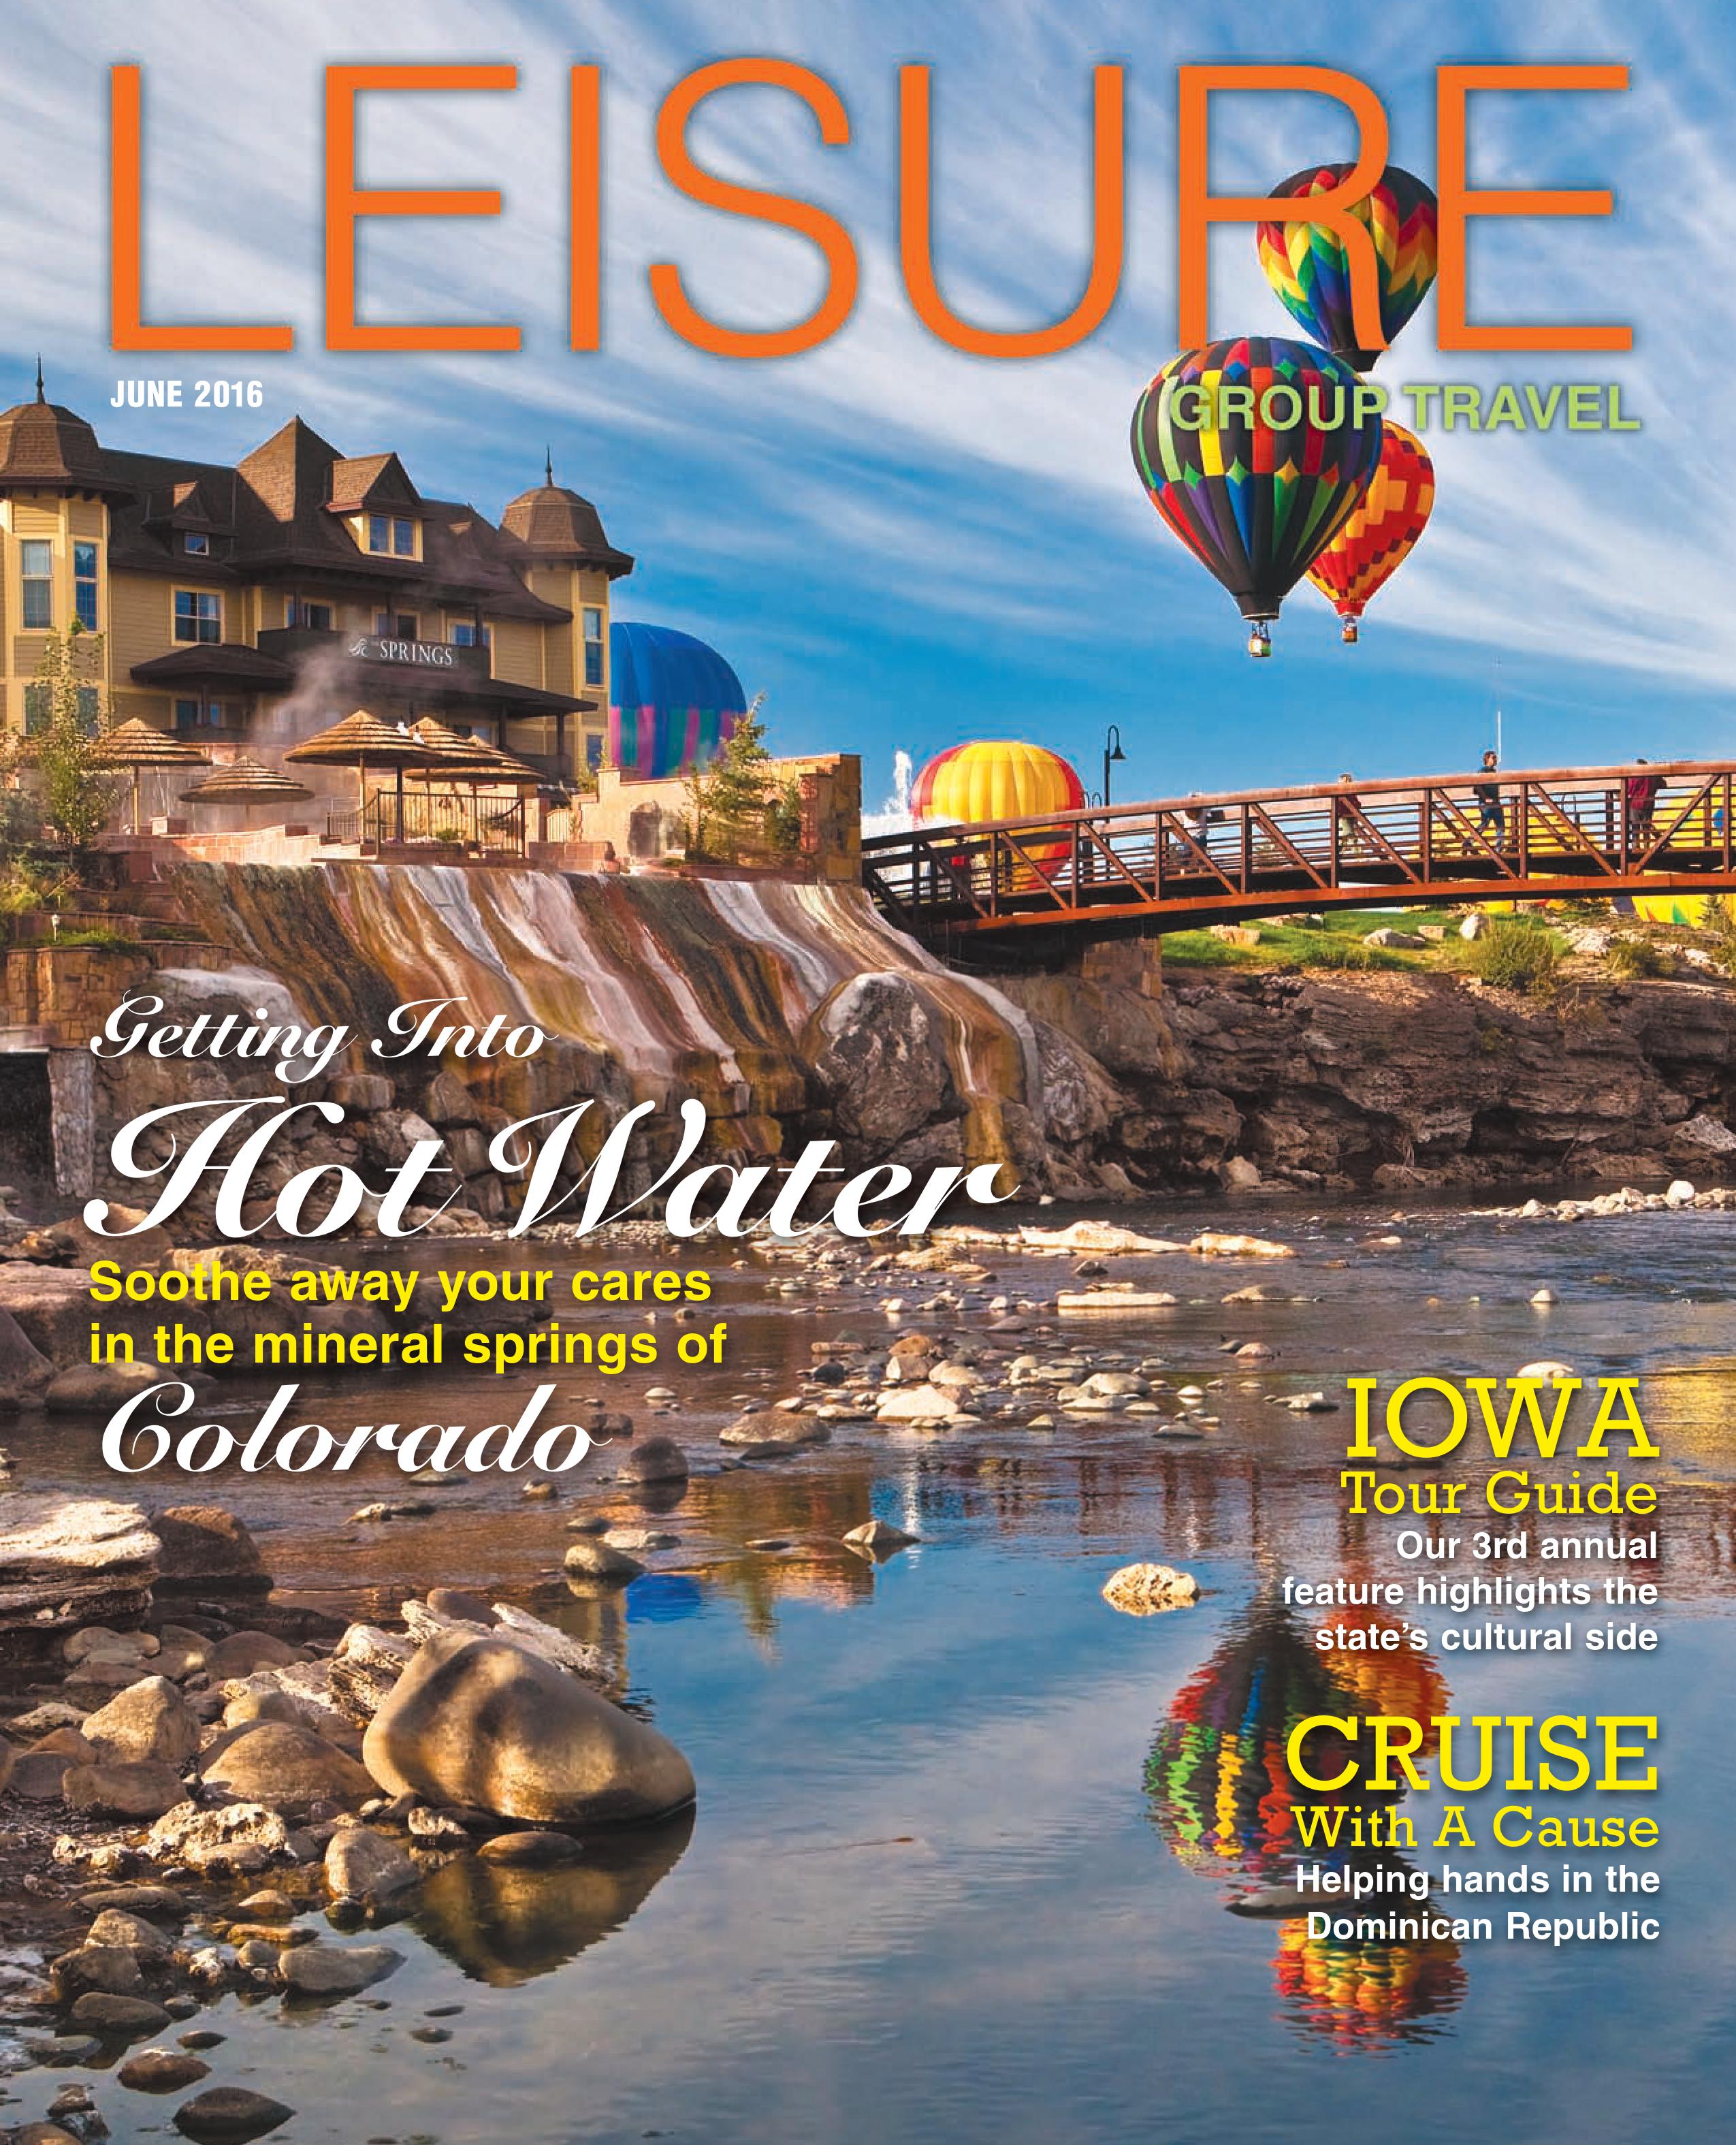 Leisure Group Travel Magazine 53